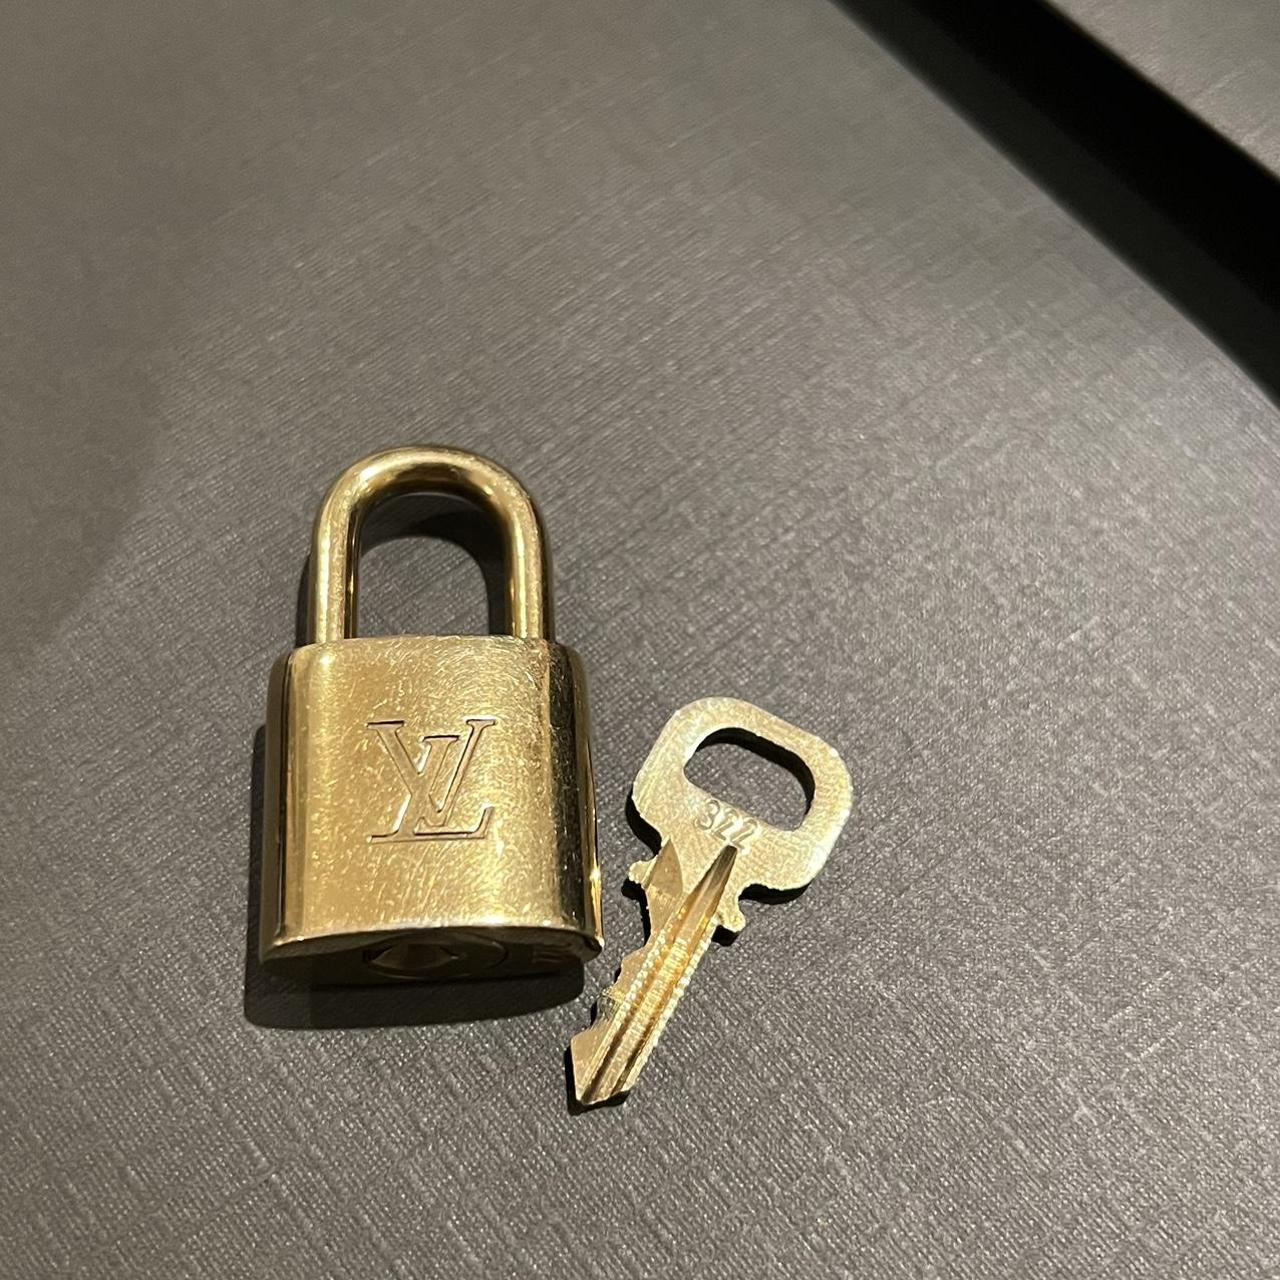 Authentic Louis Vuitton lock